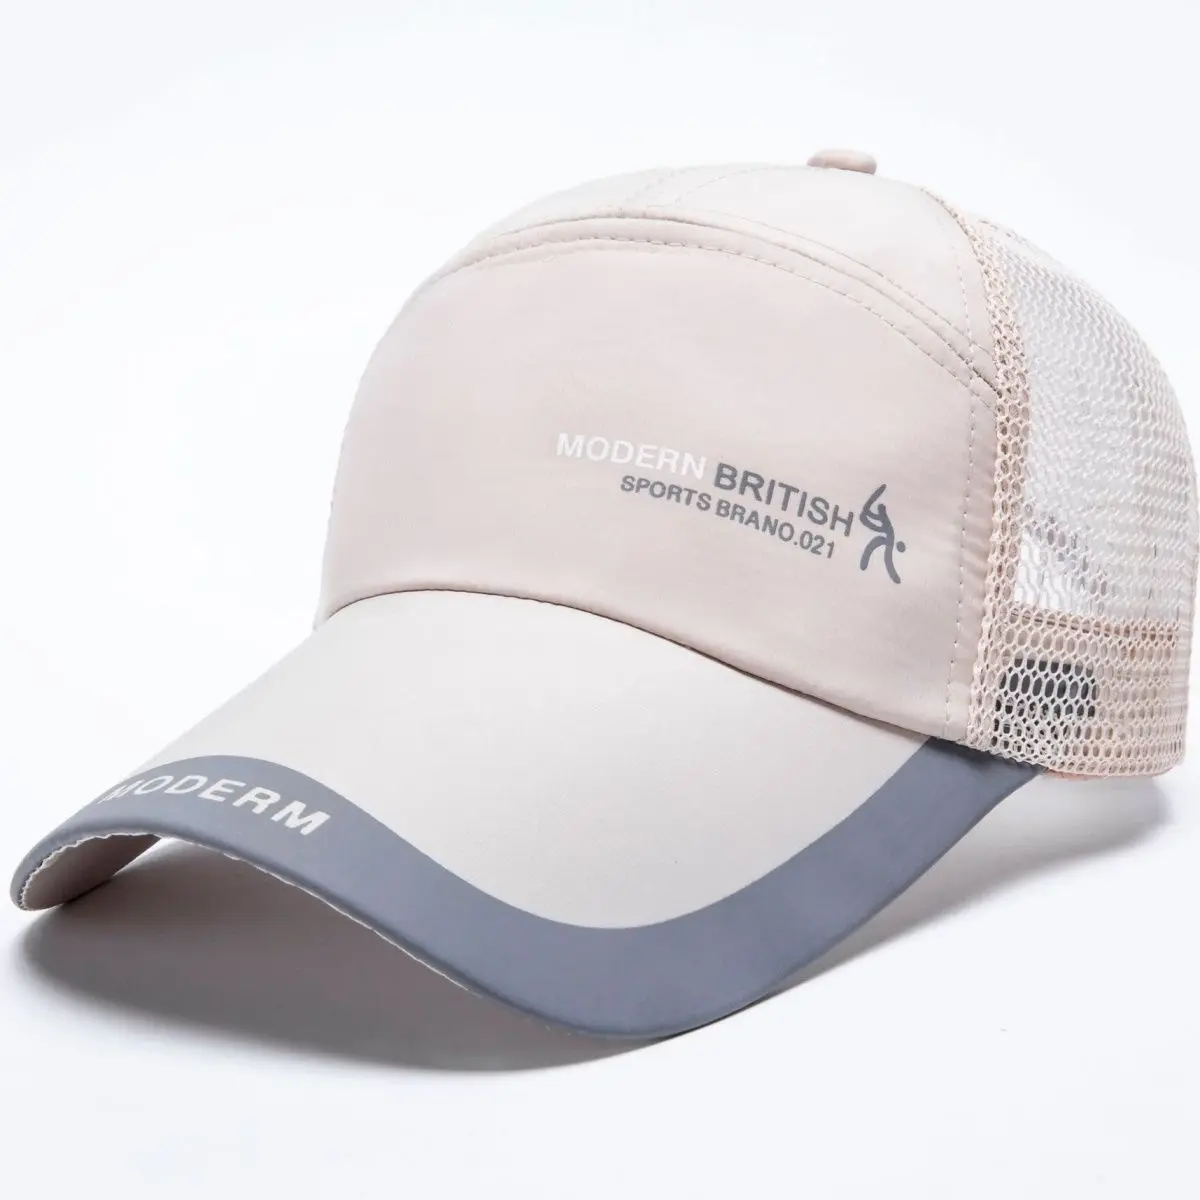 Baseball cap customize logo sport baseball cap summer hat for promotion gift